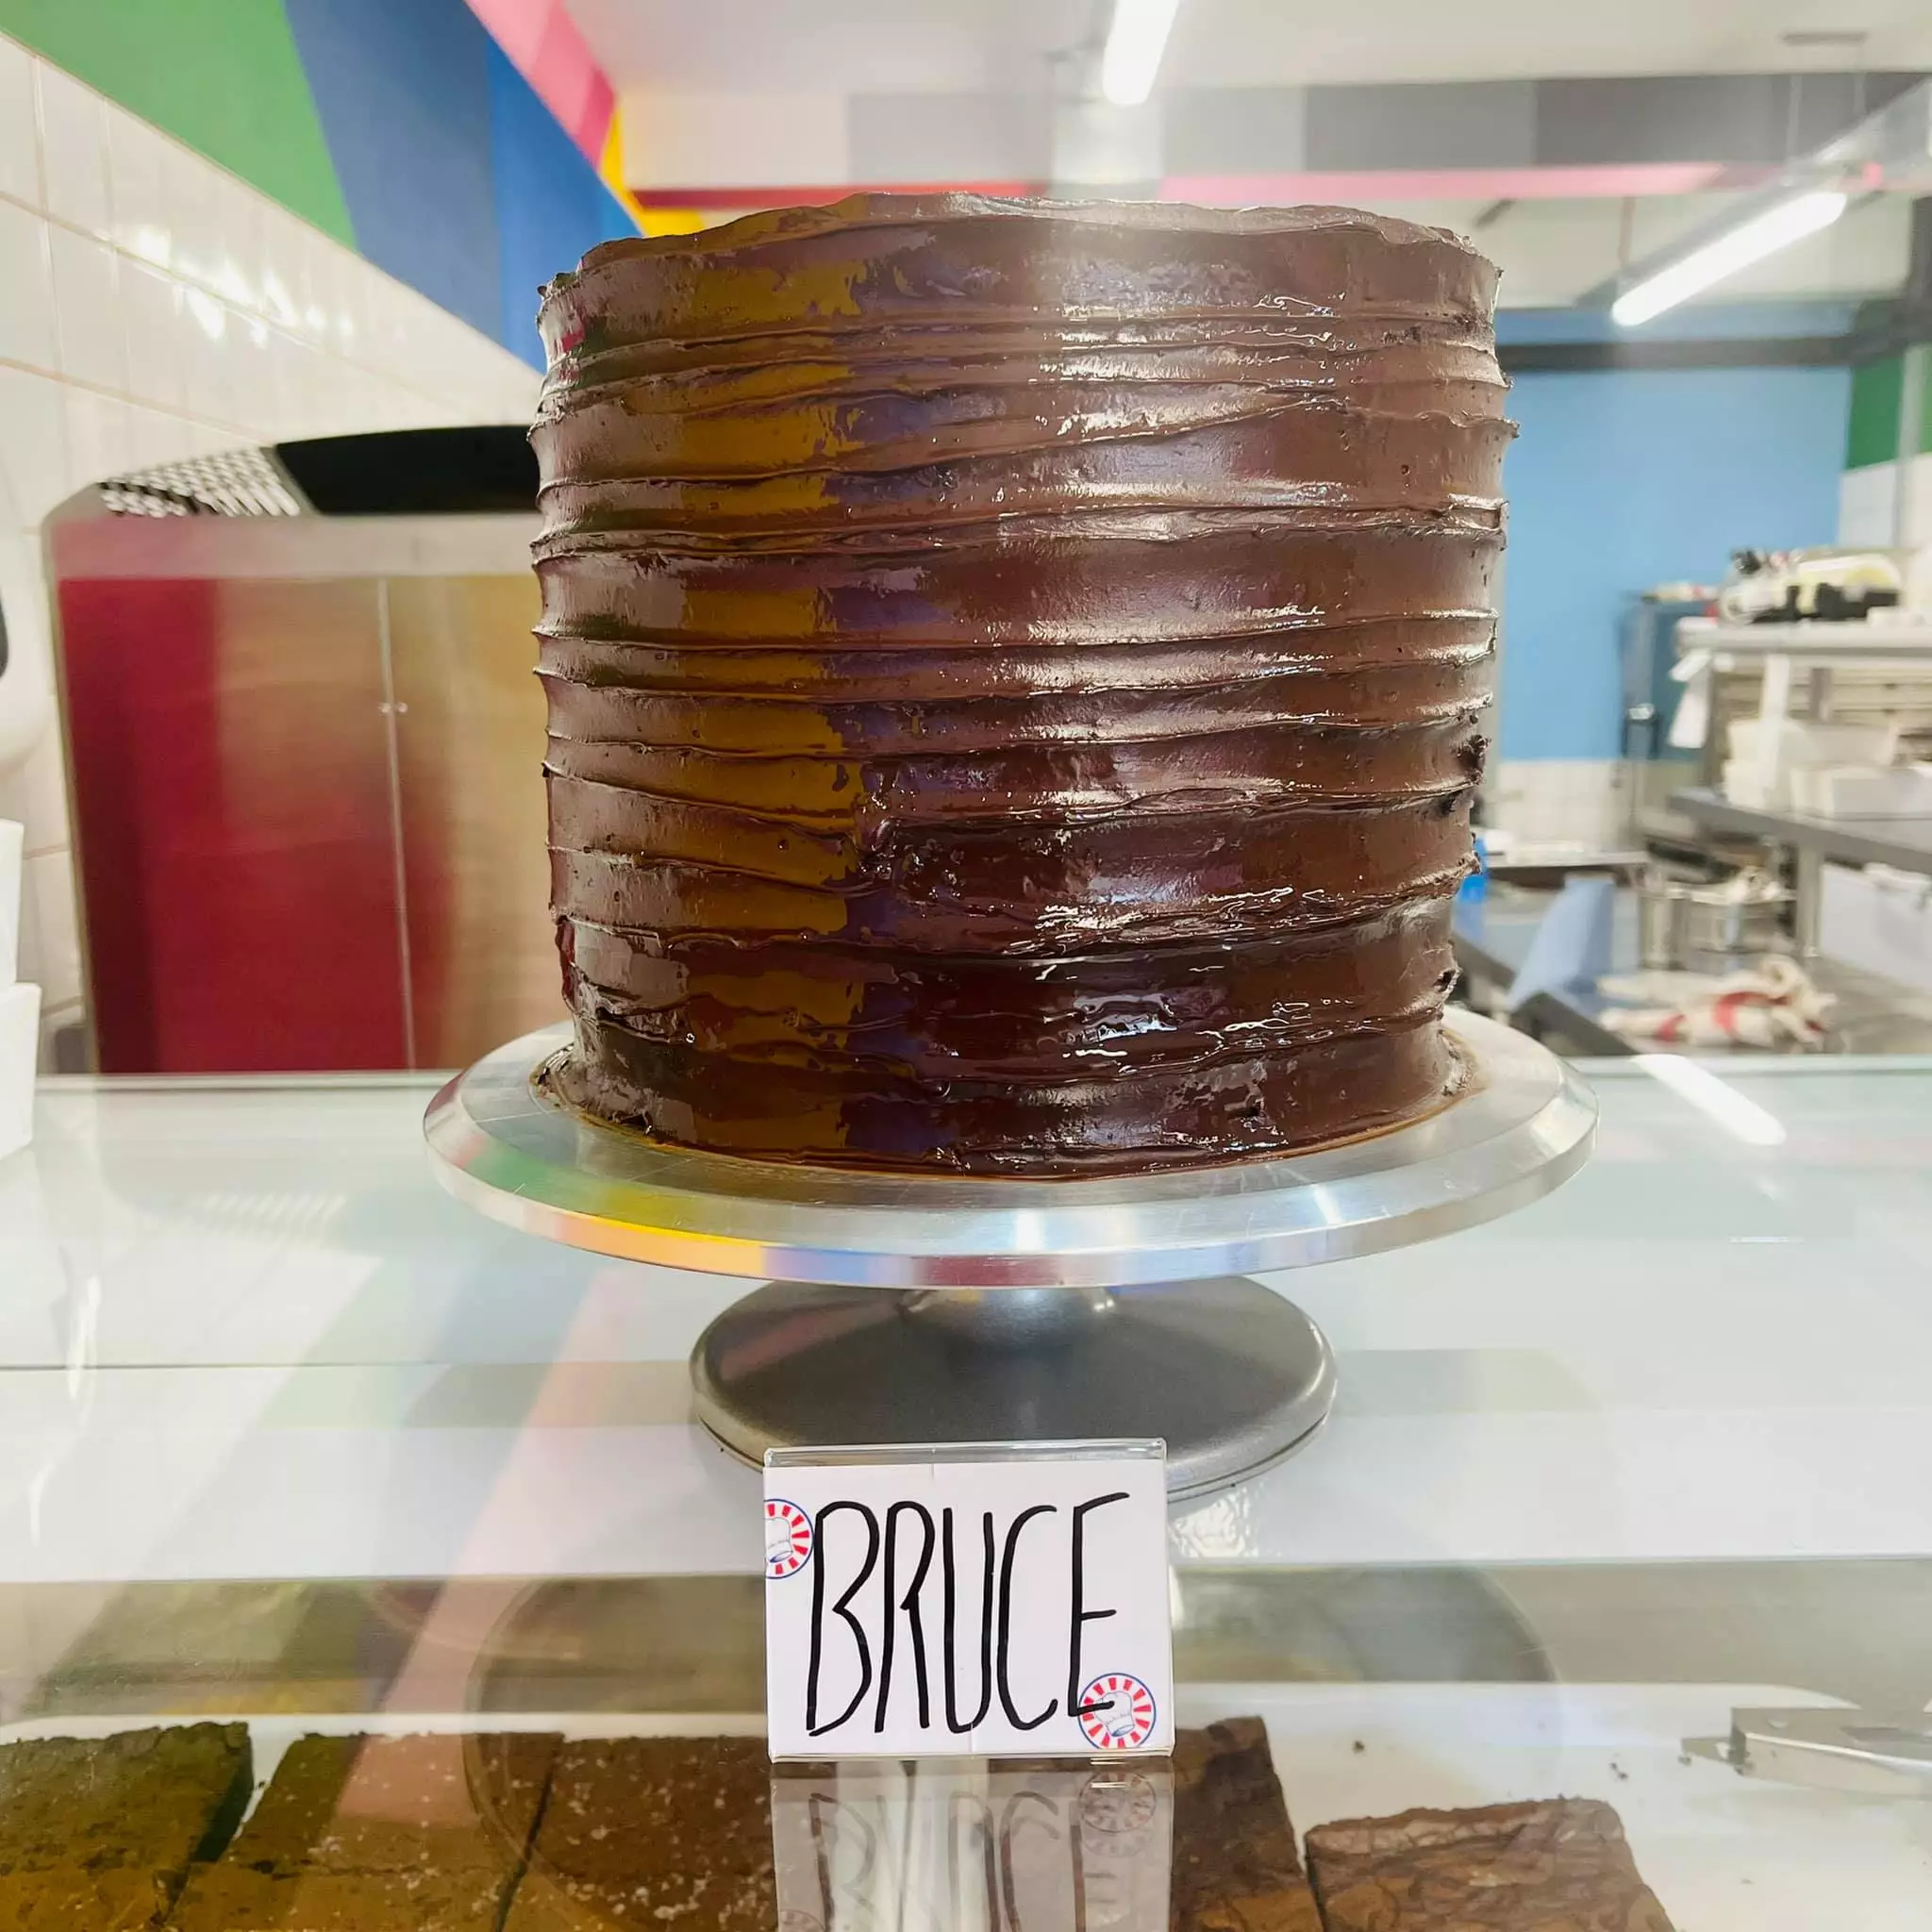 Bruce cake inspired by the film, Matilda.